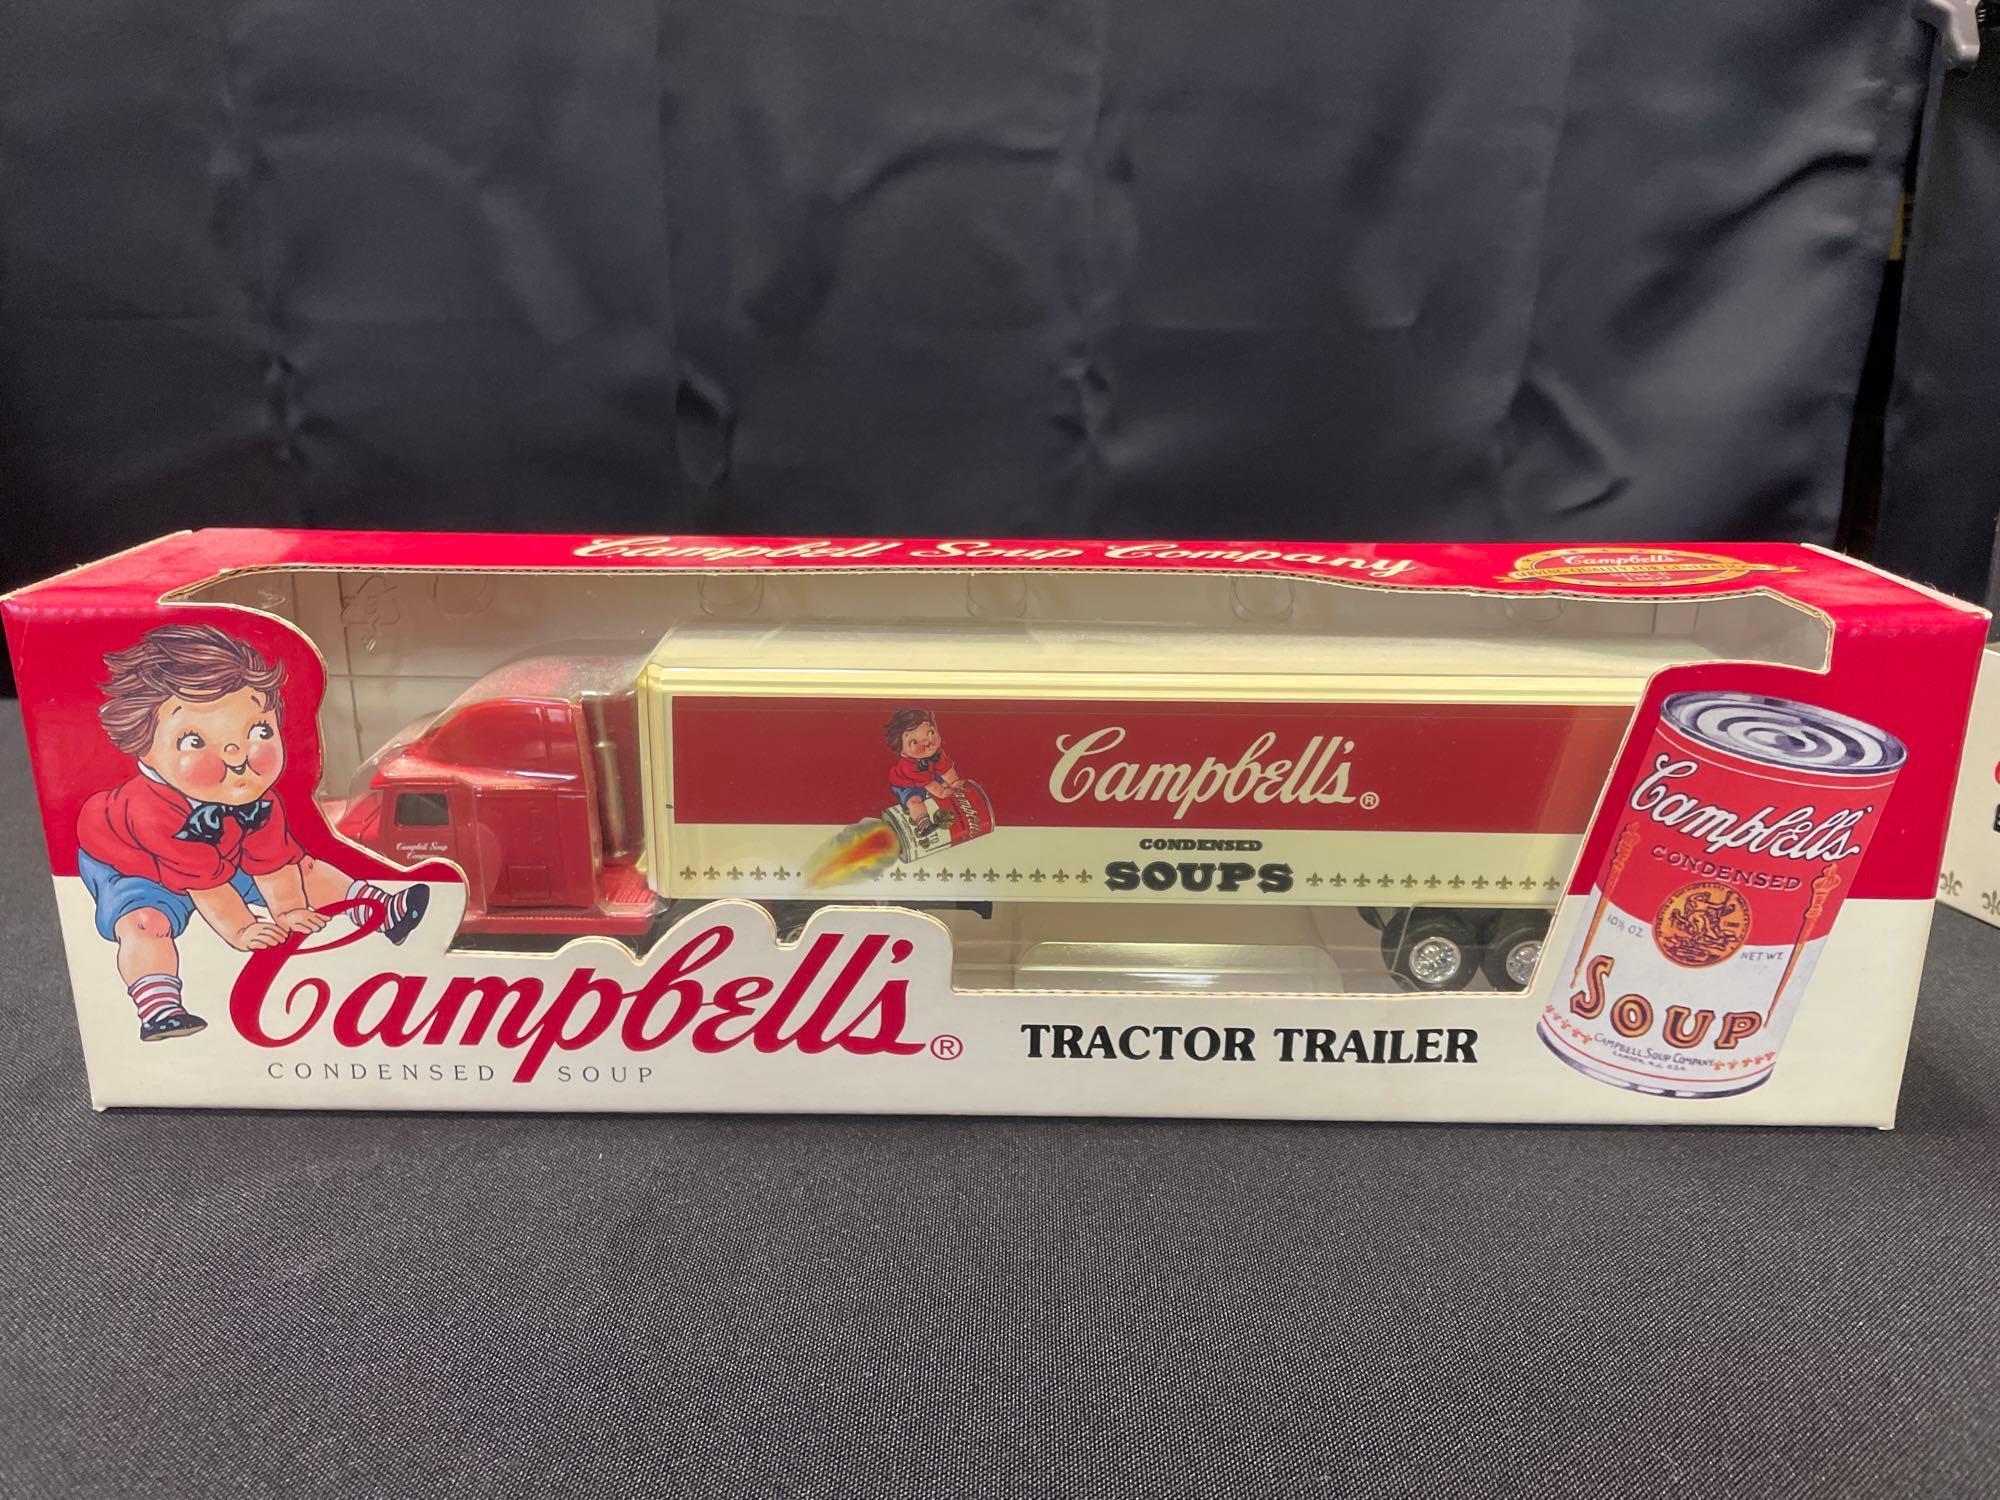 Campbells soup bobble heads (2), pencil sharpener, toy truck